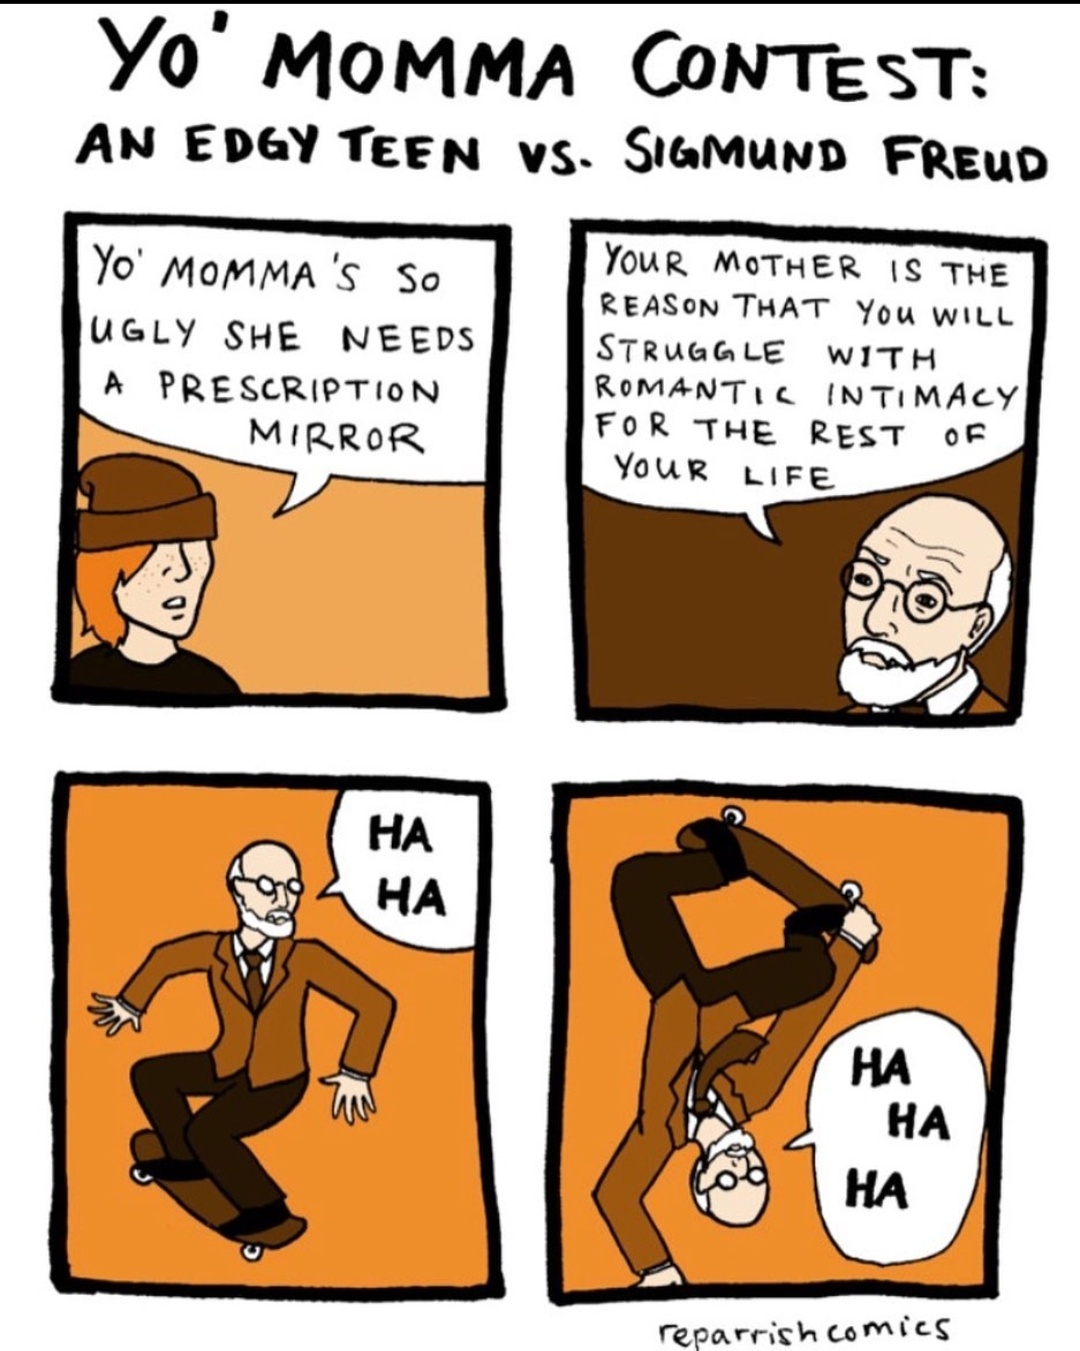 Freud don't slip, biotch.